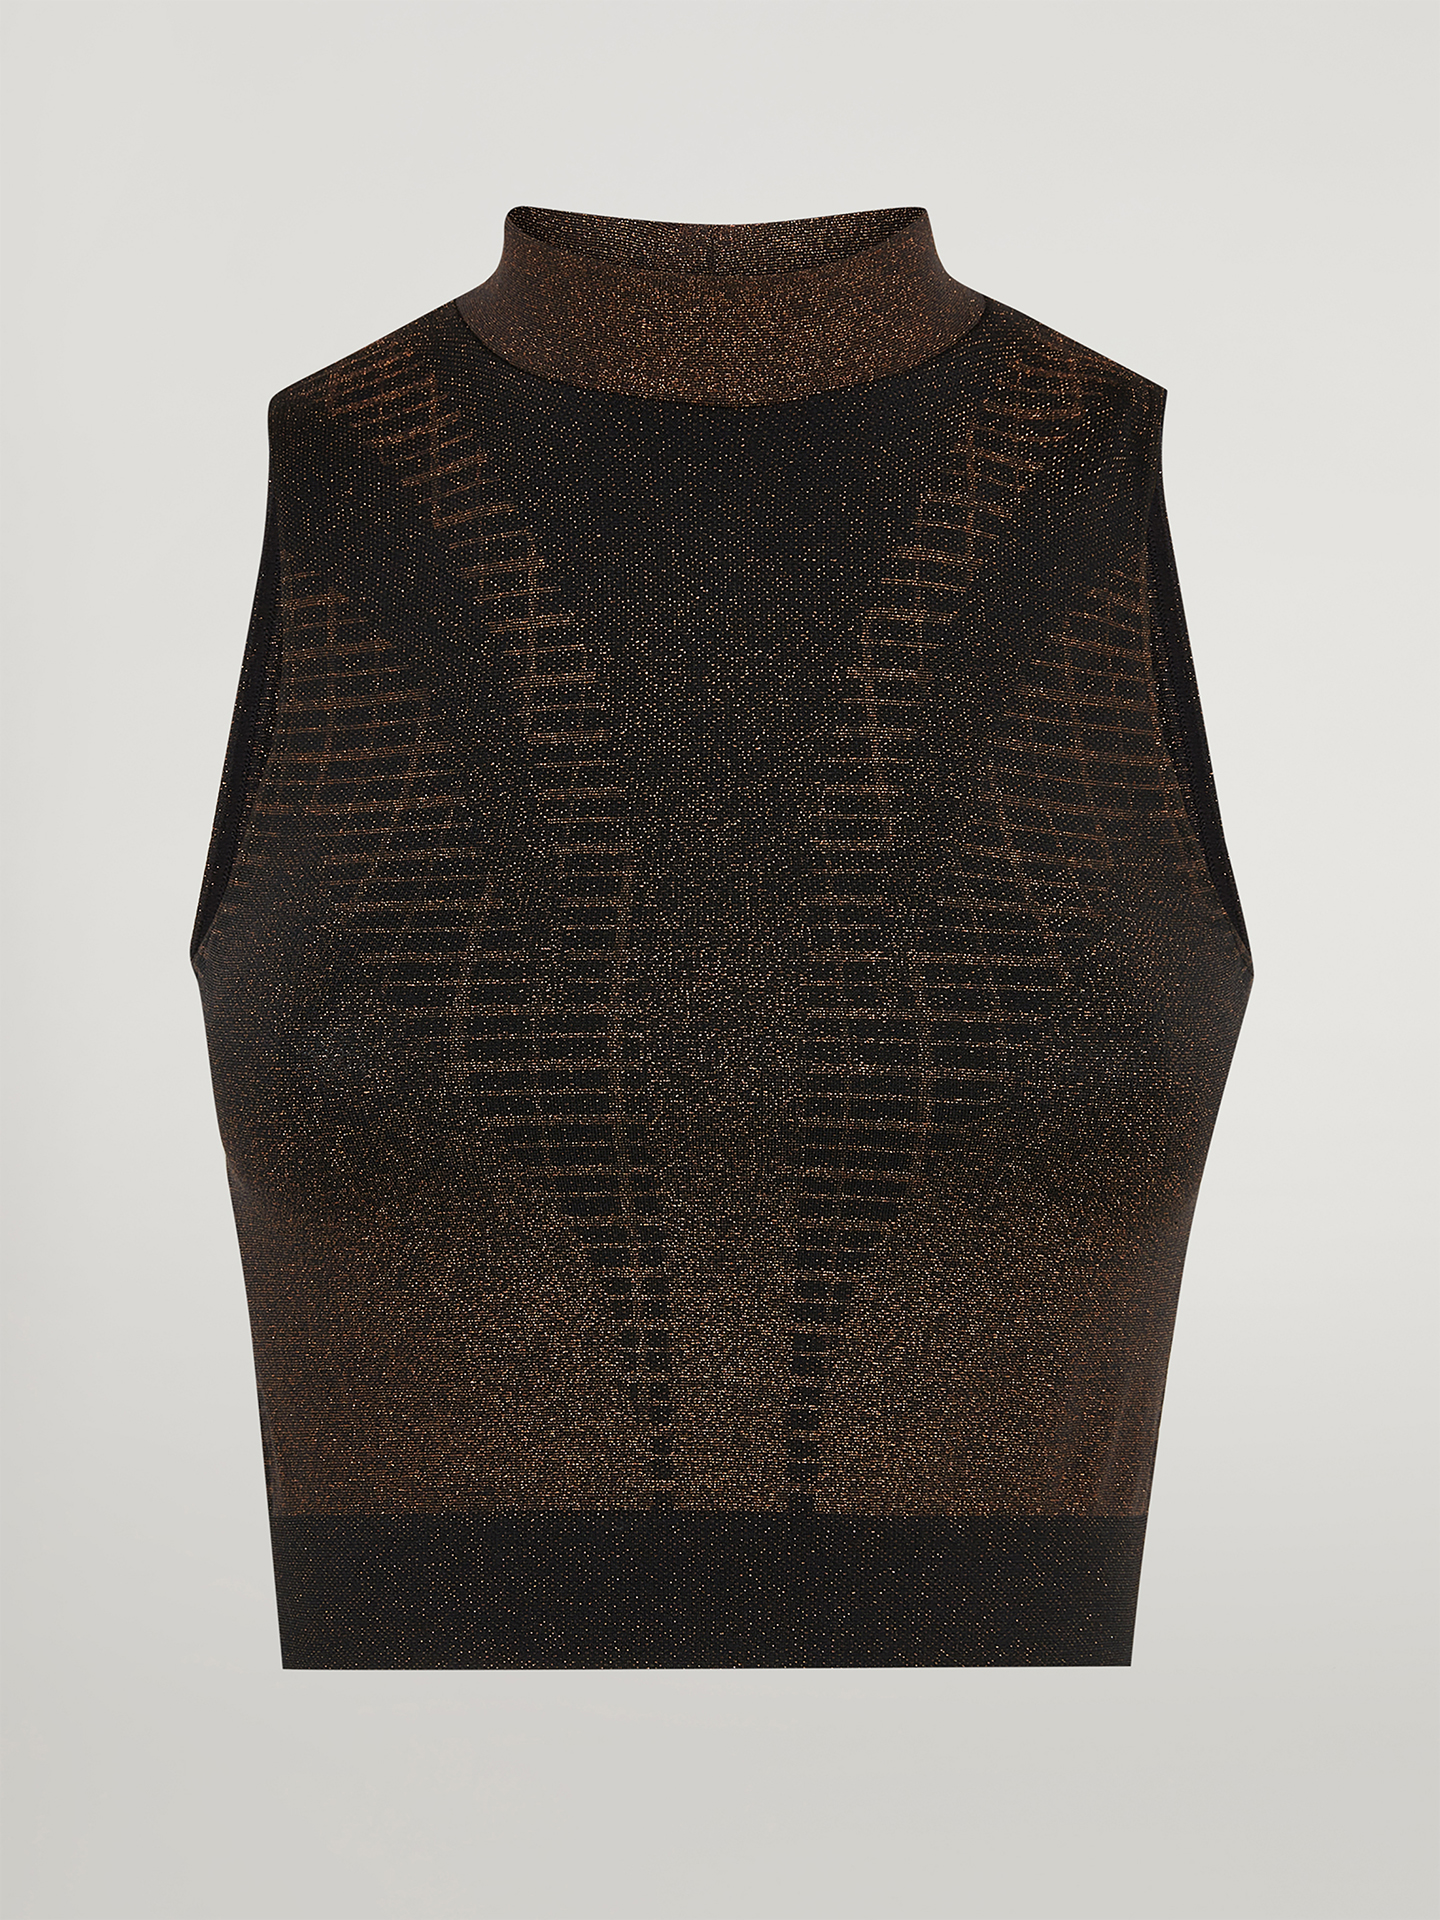 Wolford - Shiny Grid Top Sleeveless, Frau, black/copper, Größe: S günstig online kaufen